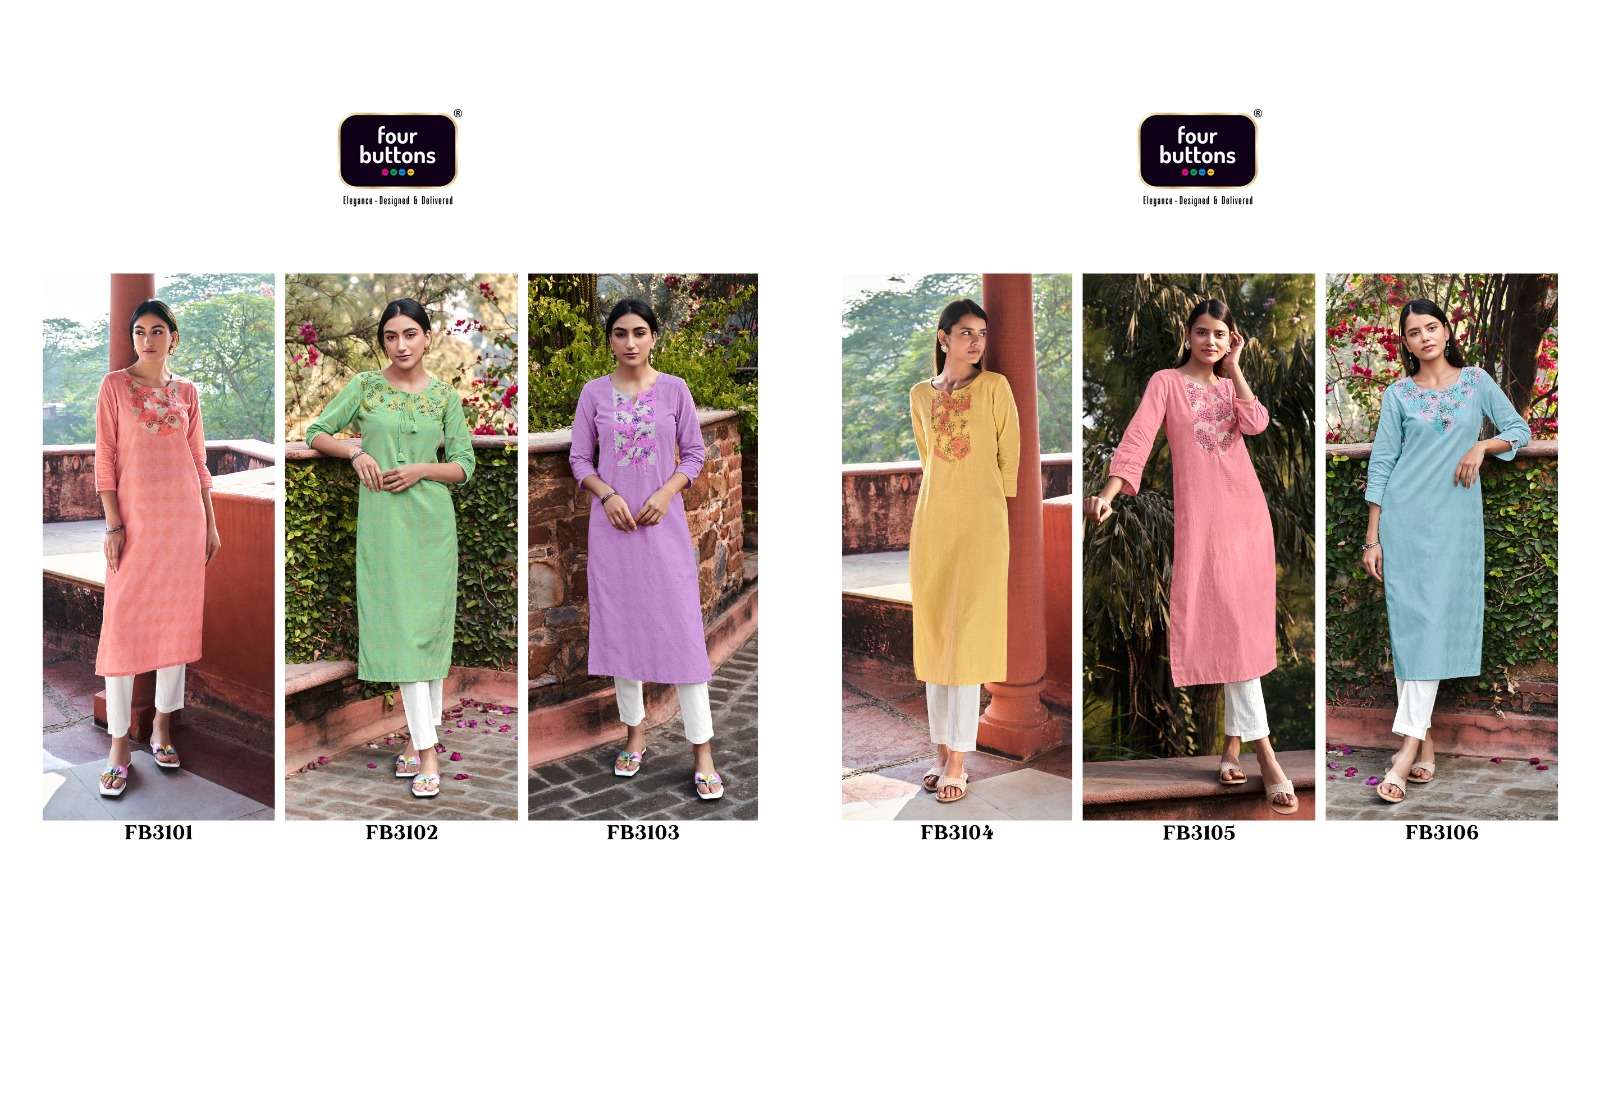 Buy VISVA DESIGNER Floral Printed Cotton Straight Kurti for Women Yellow S  at Amazon.in